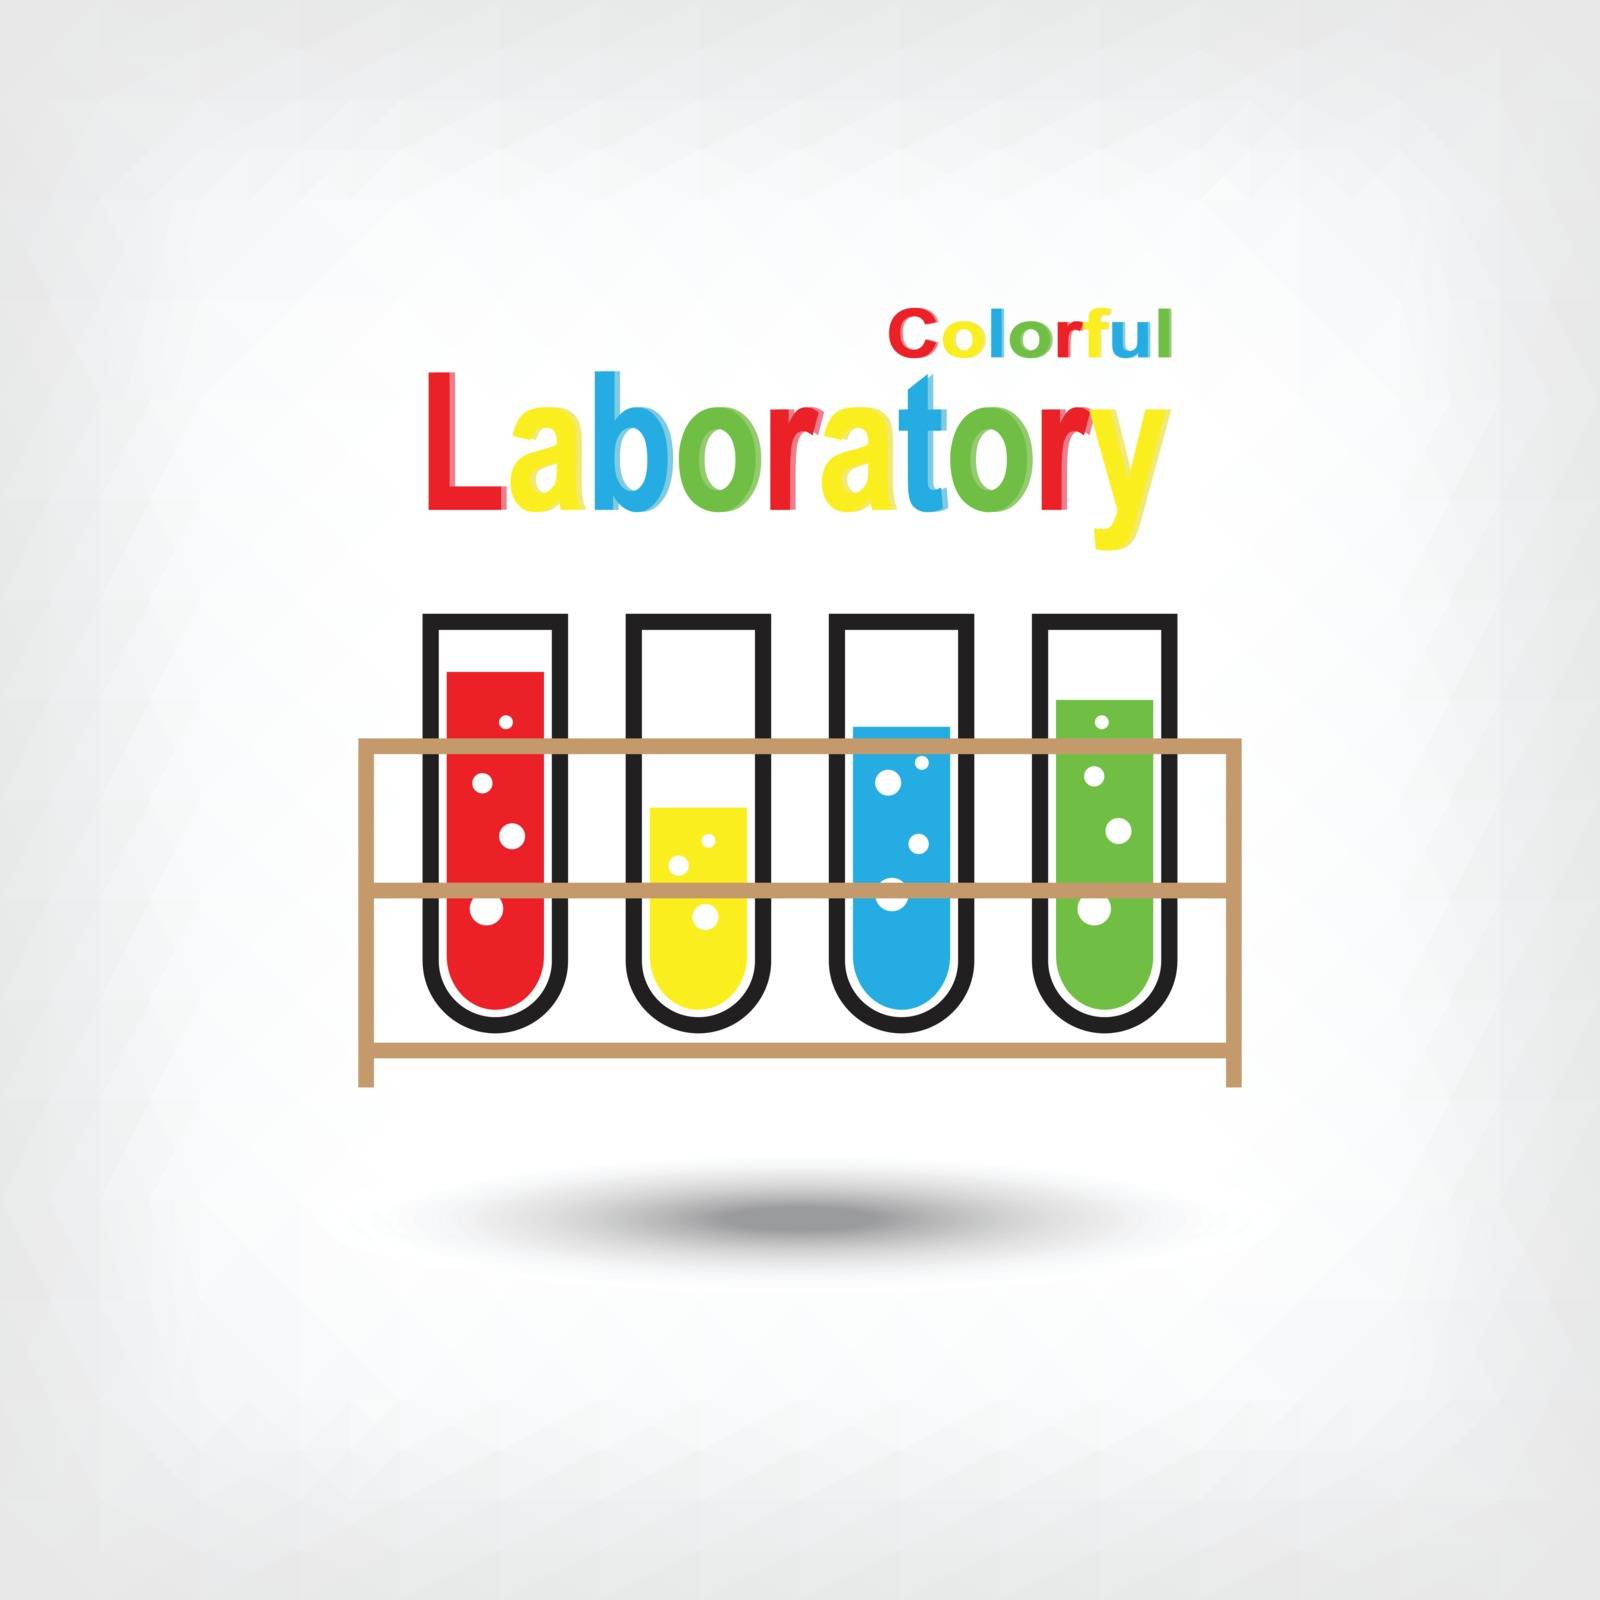 Colorful Laboratory by stockdevil